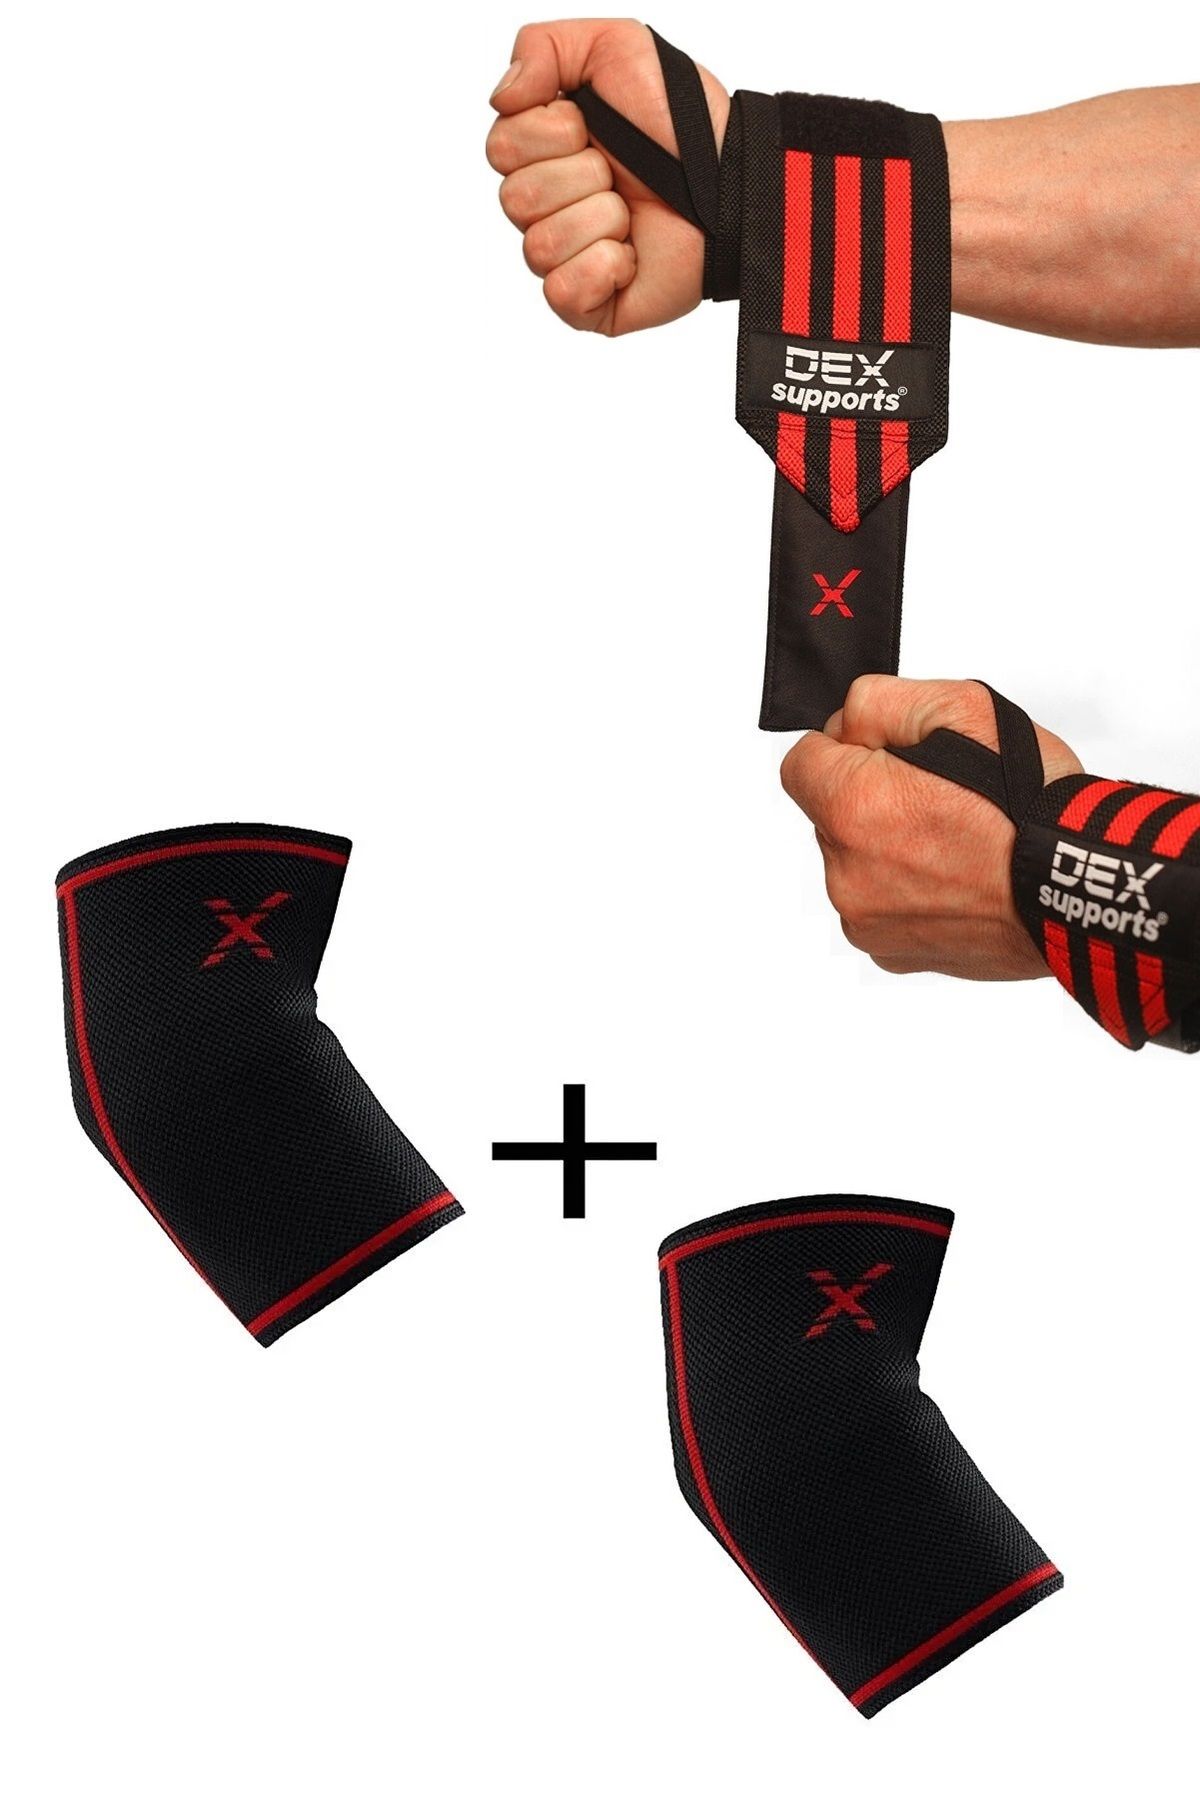 Dex Supports Fitness Dirseklik , Fitness Bilek Bandajı Wraps , Elbow Sleeve, Wrist Wraps 2'li Paket